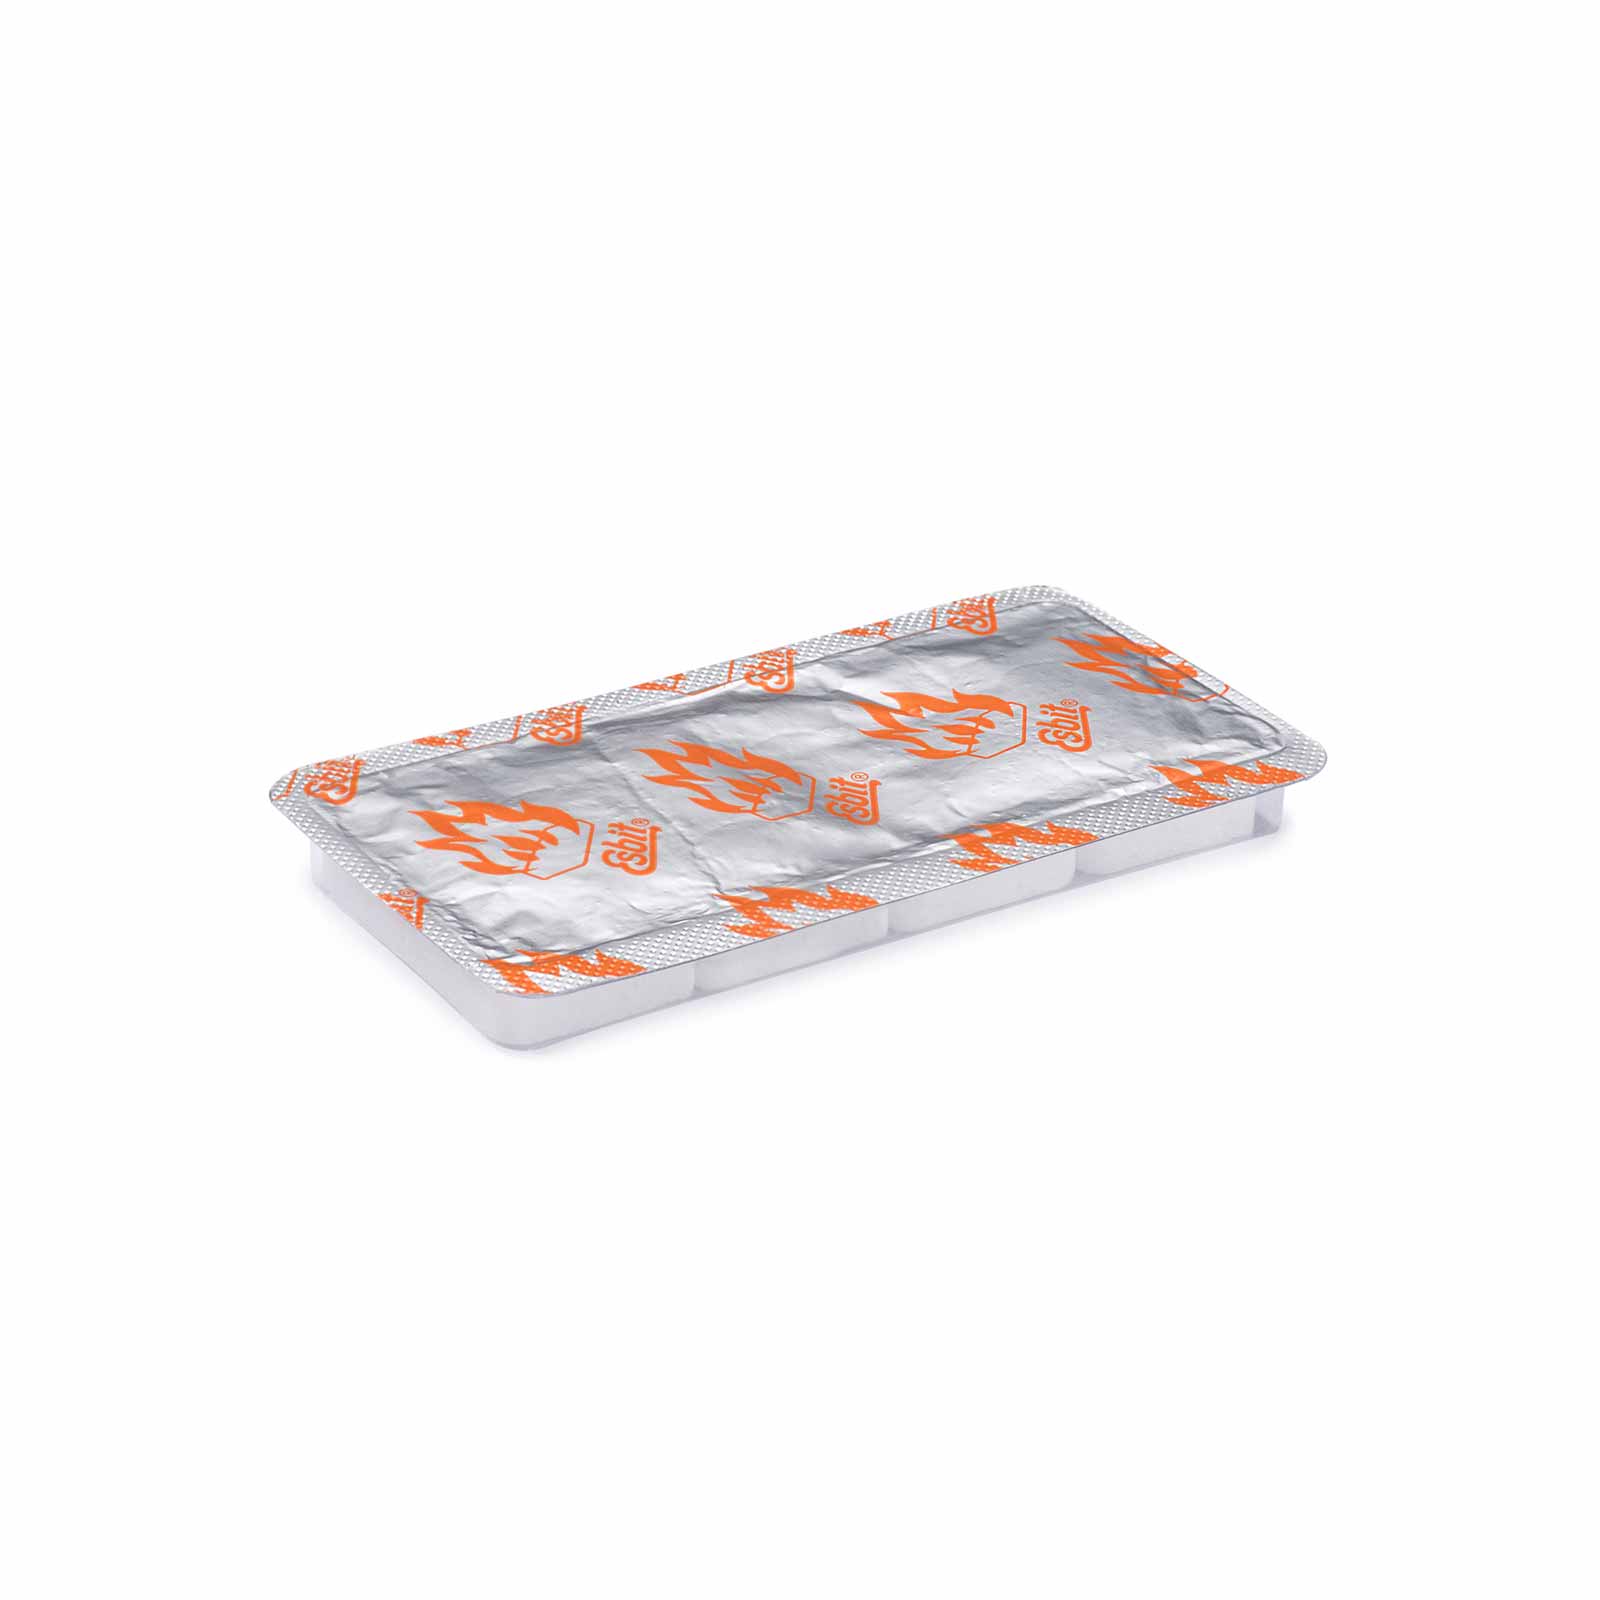 Esbit Trockenbrennstoff-Tabletten 16x5g in Blister-Verpackung